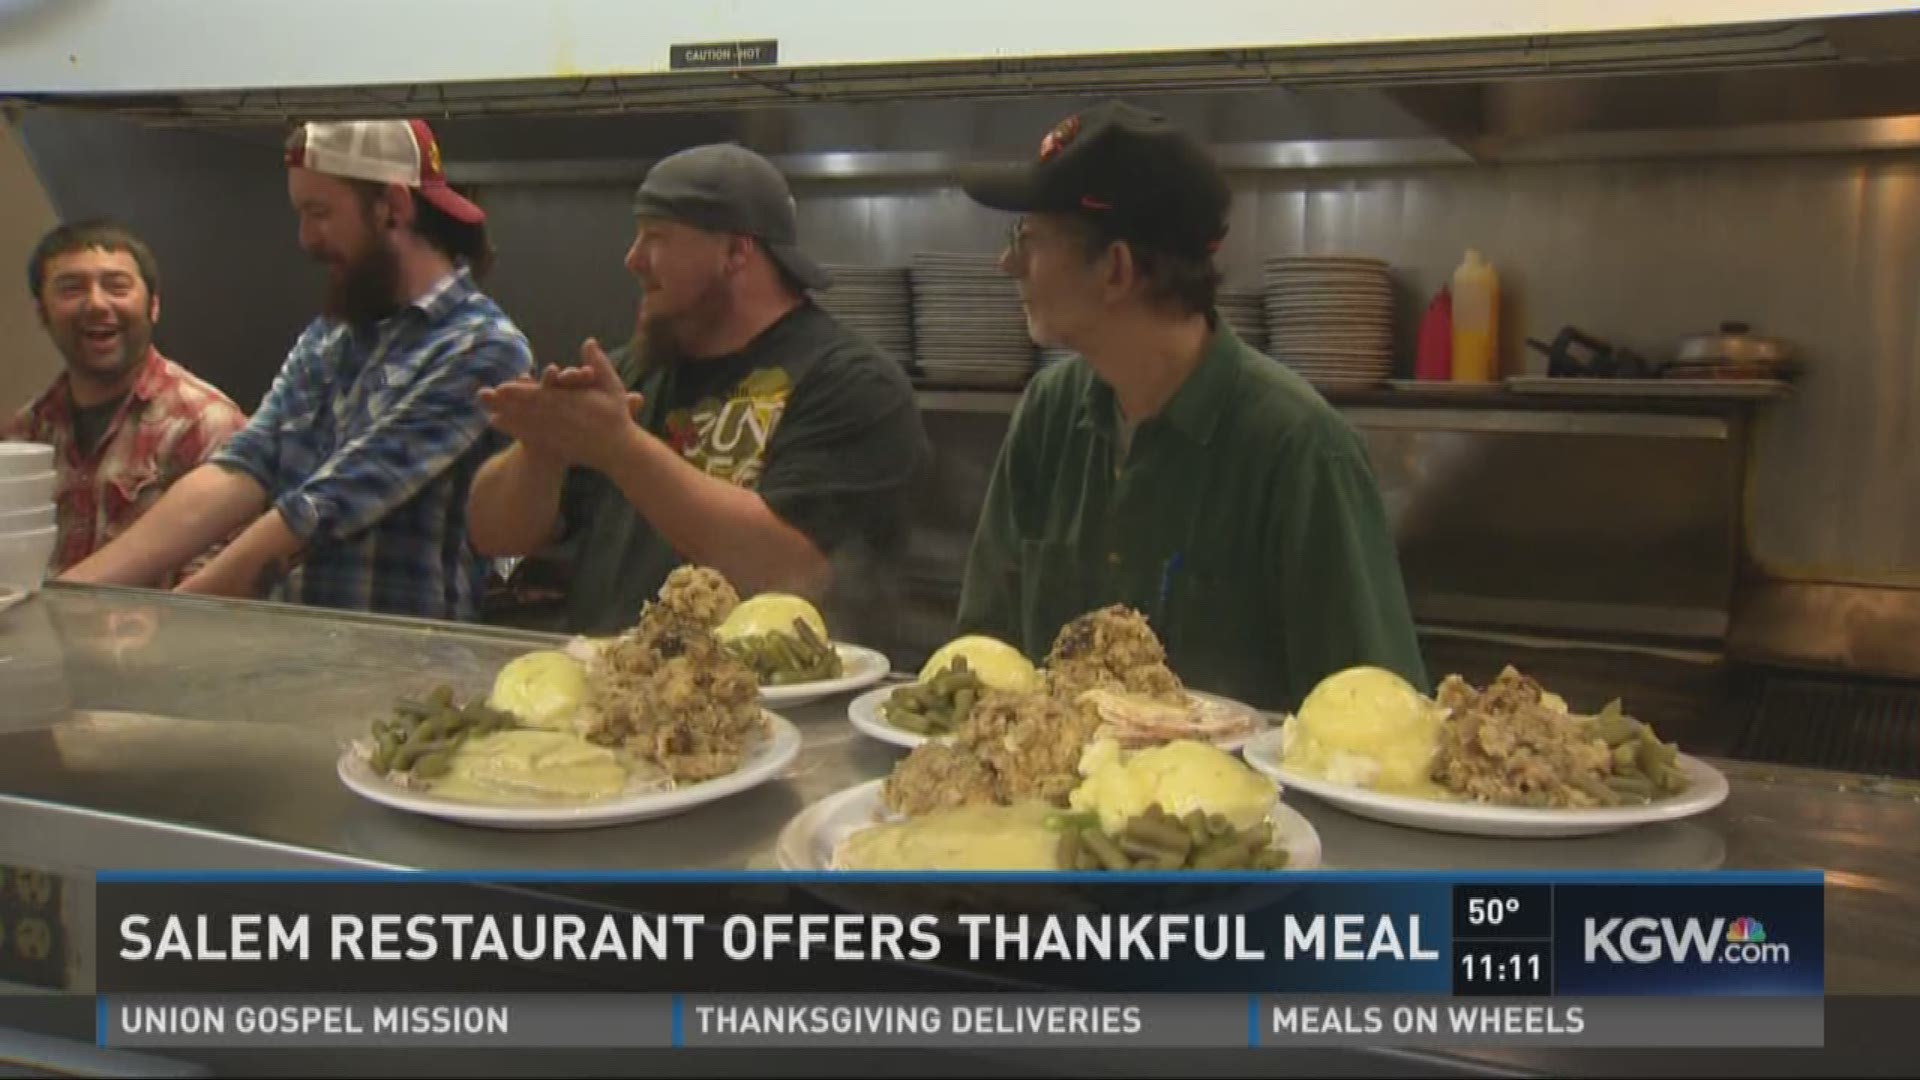 Salem restaurant offers thankful meal